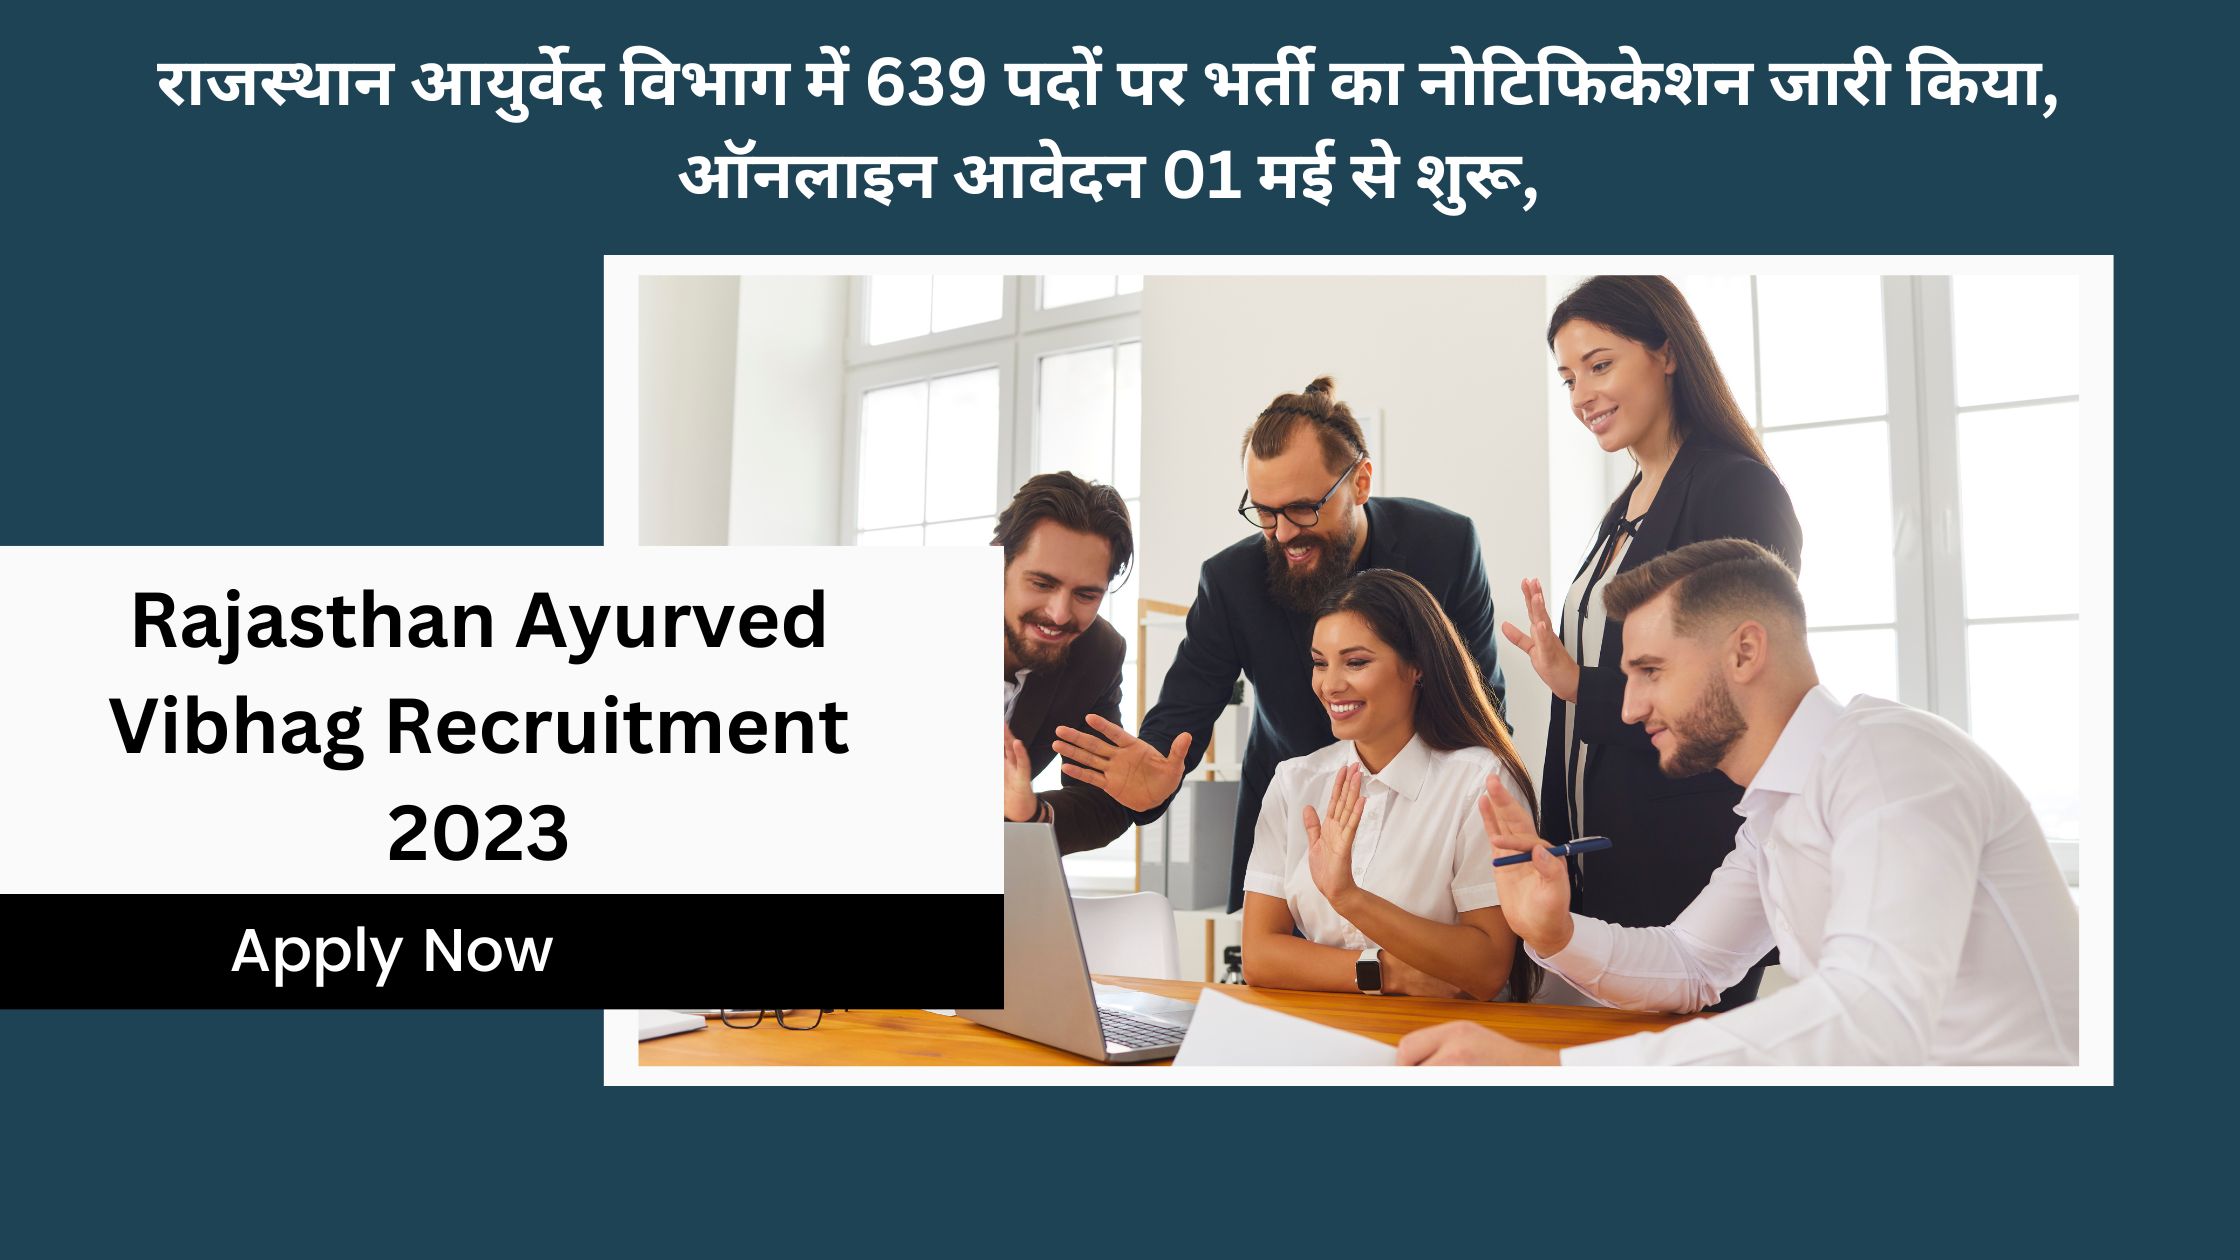 Rajasthan Ayurved Vibhag Recruitment 2023 